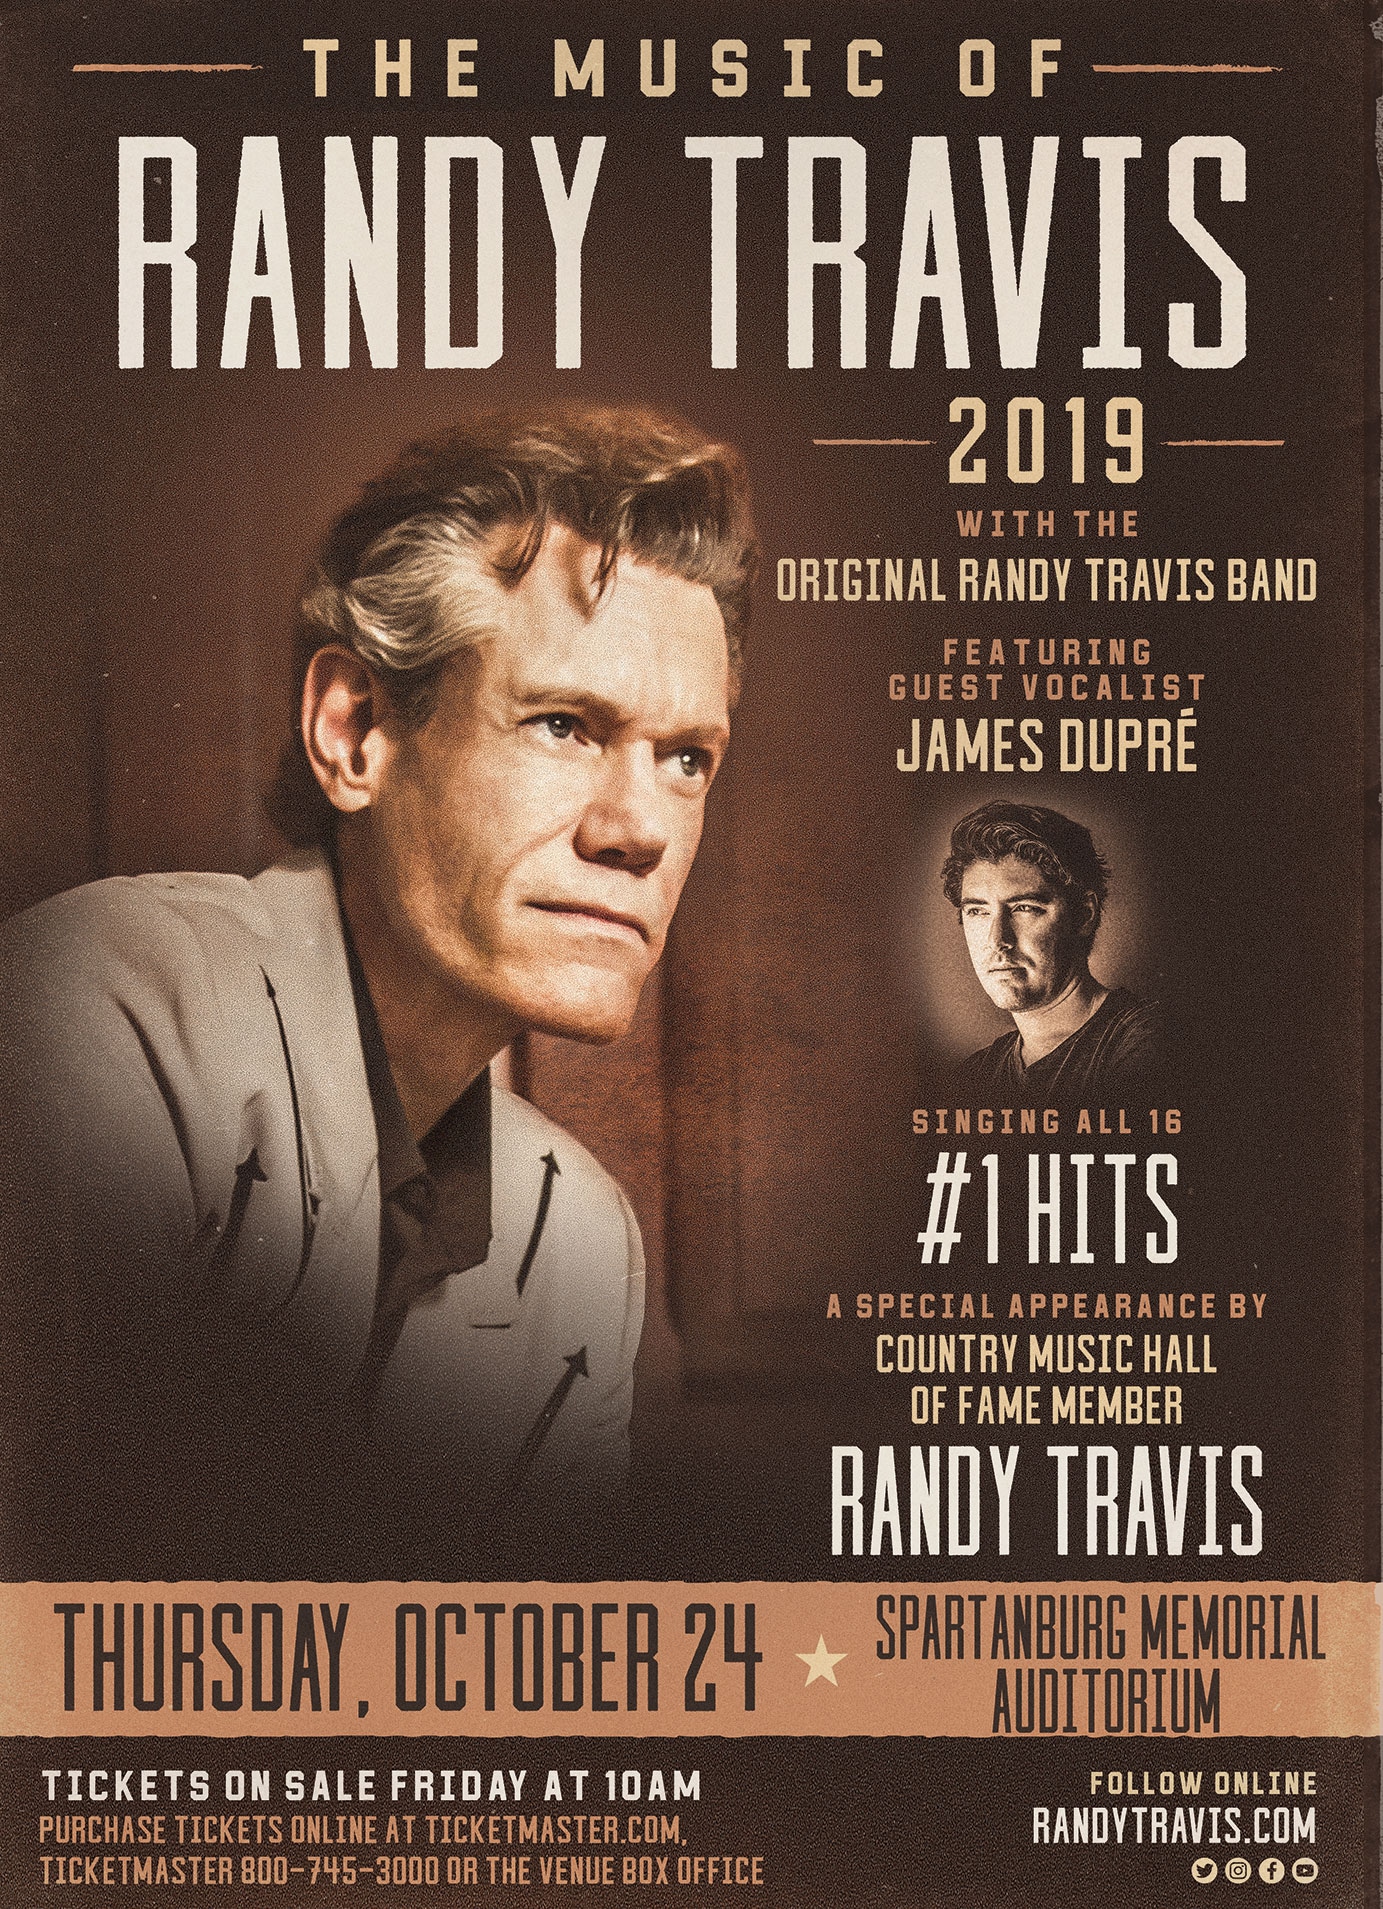 The Music of Randy Travis